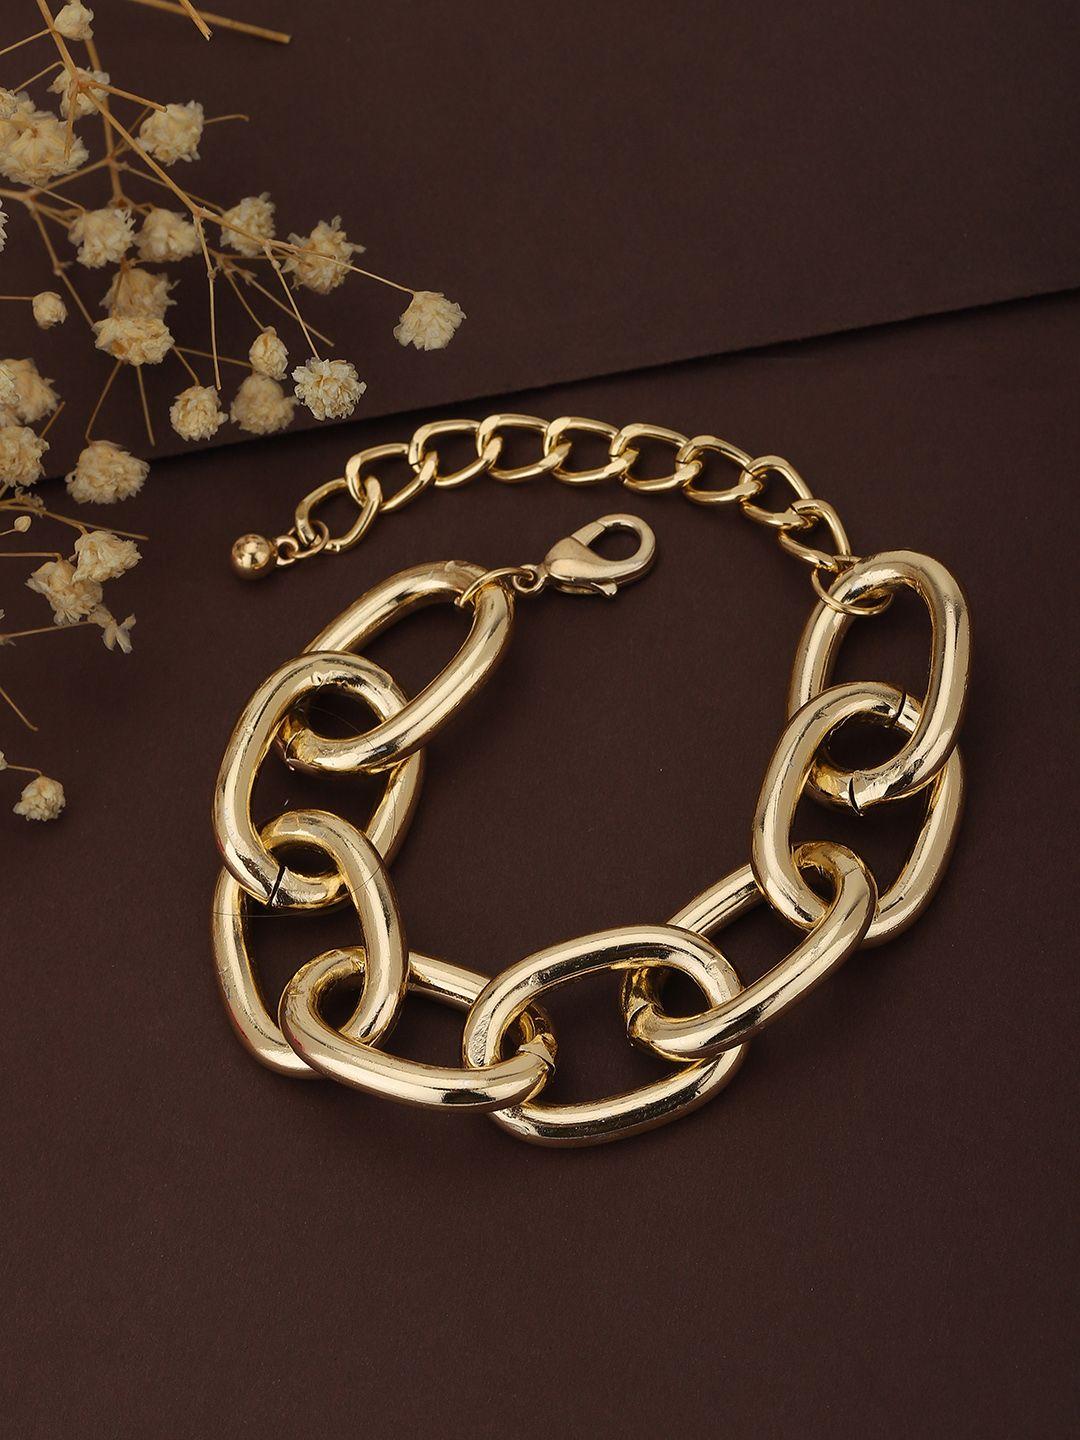 carlton-london-women-gold-toned-rose-gold-plated-link-bracelet